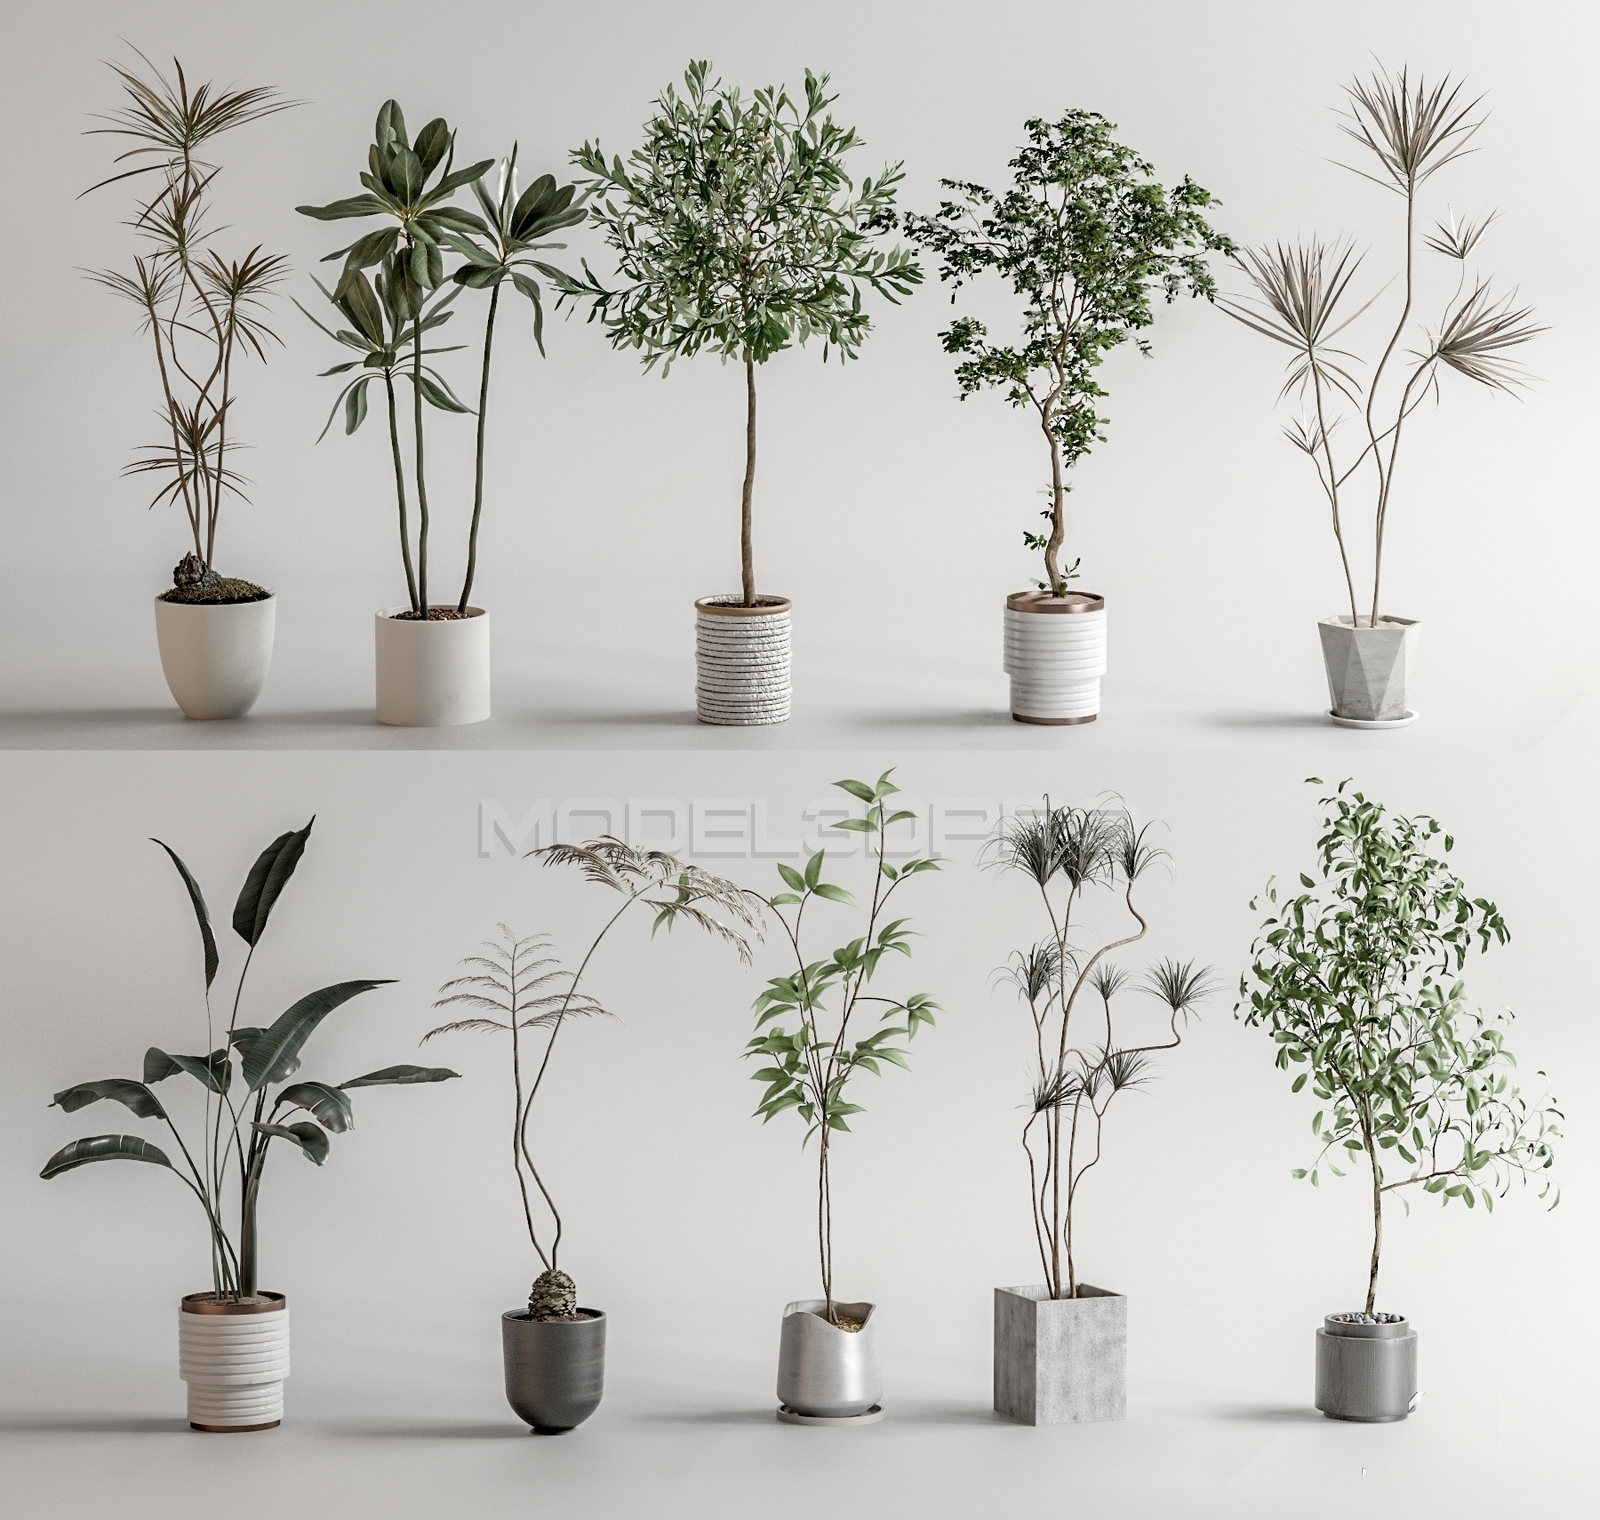 Free & Professional Plant 3D Models 6248-NghiaHouse-Model3dpro